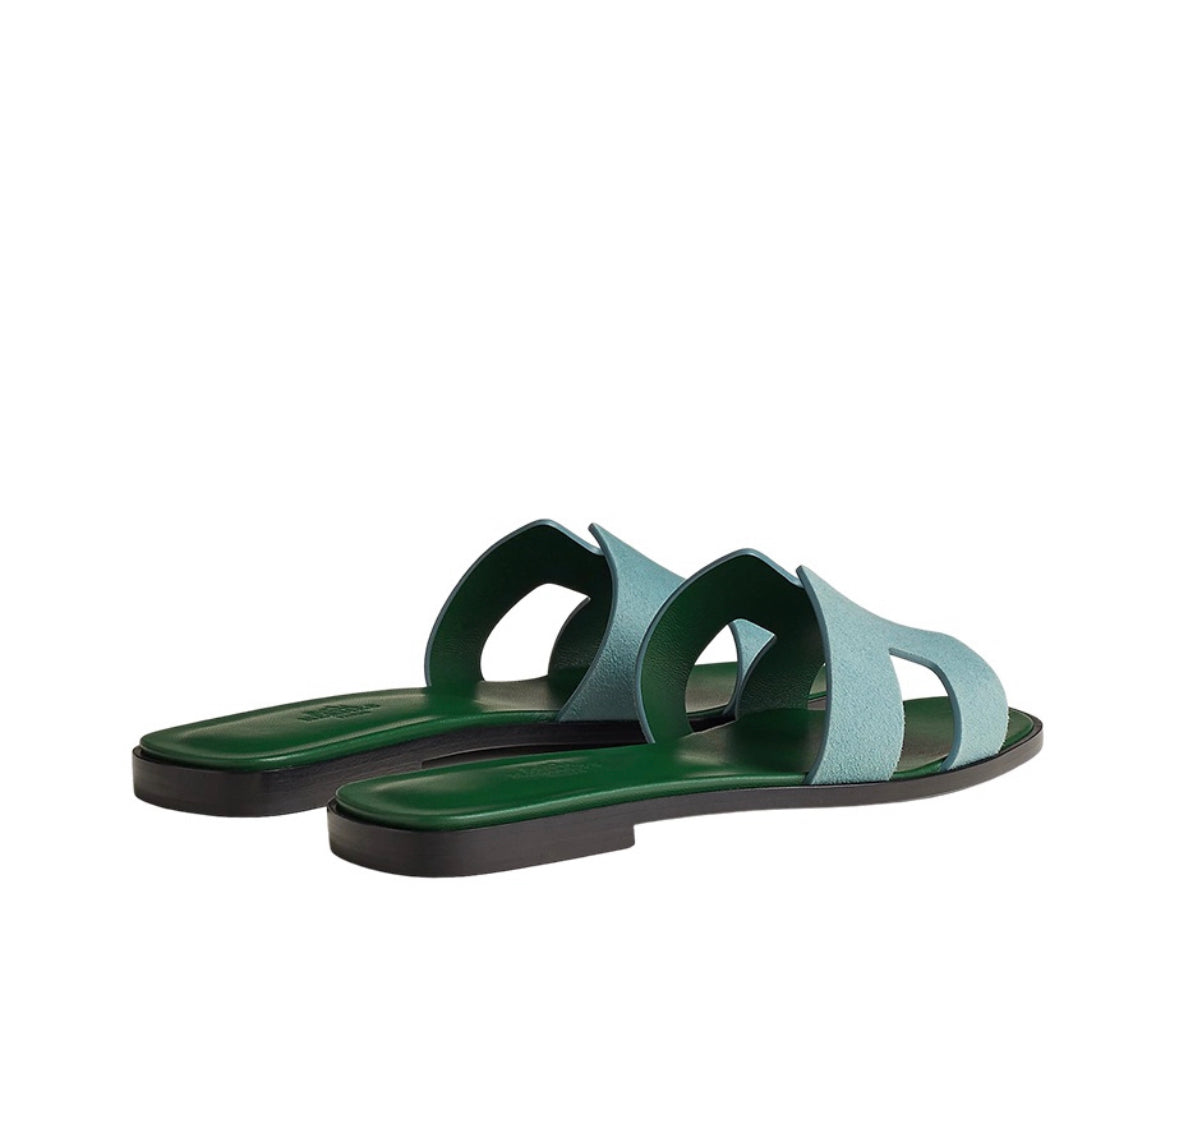 Hermes Oran Sandals “Olive/Turquoise”